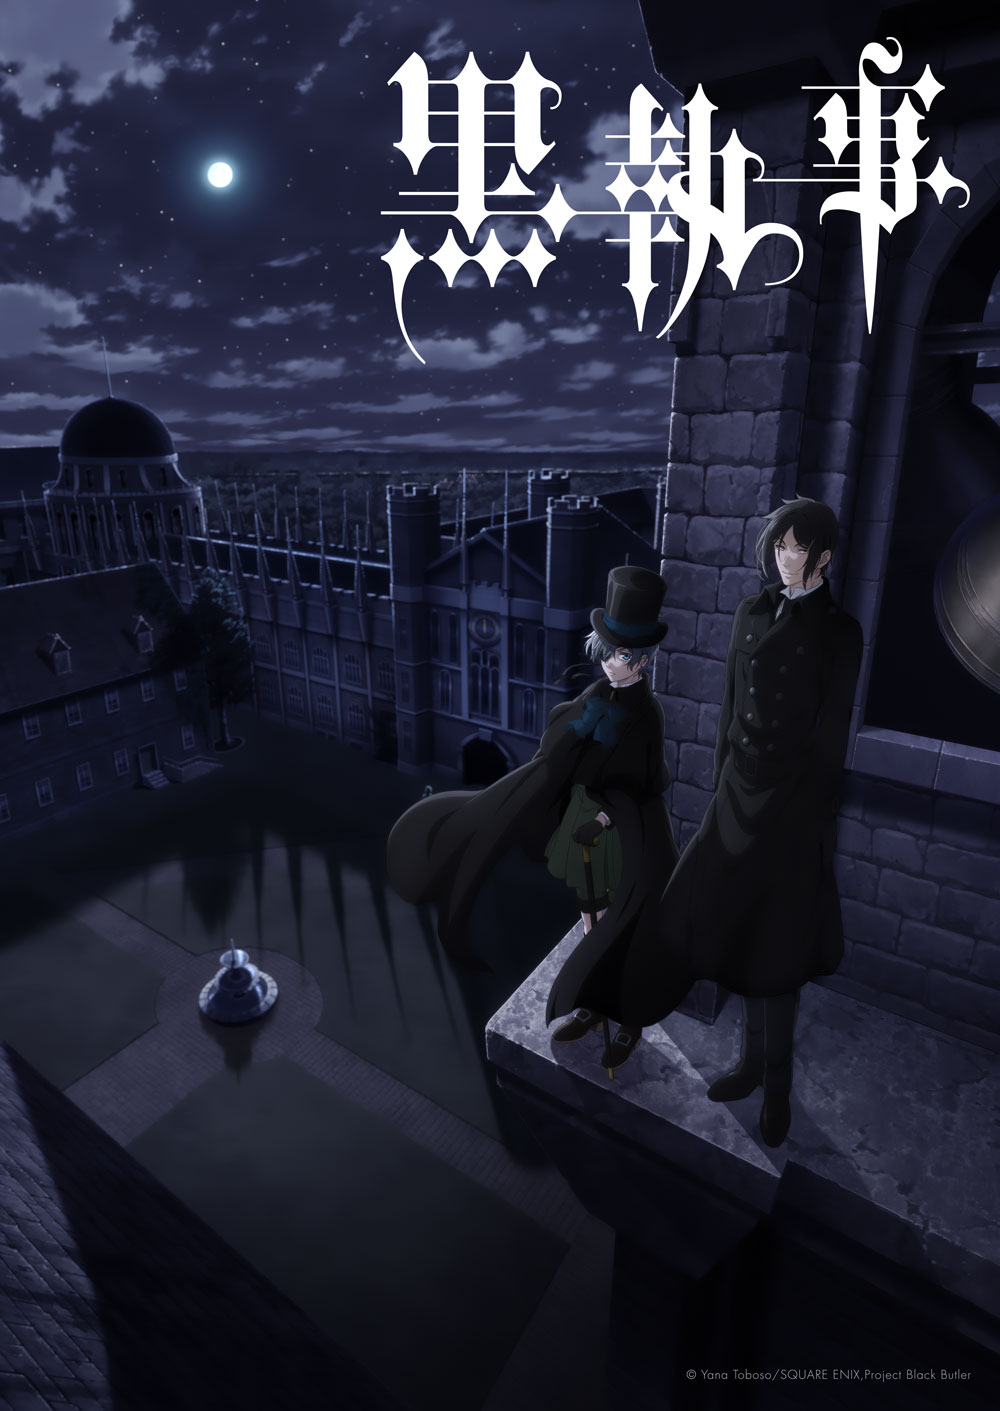 Black Butler or Kuroshitsuji (the Anime)